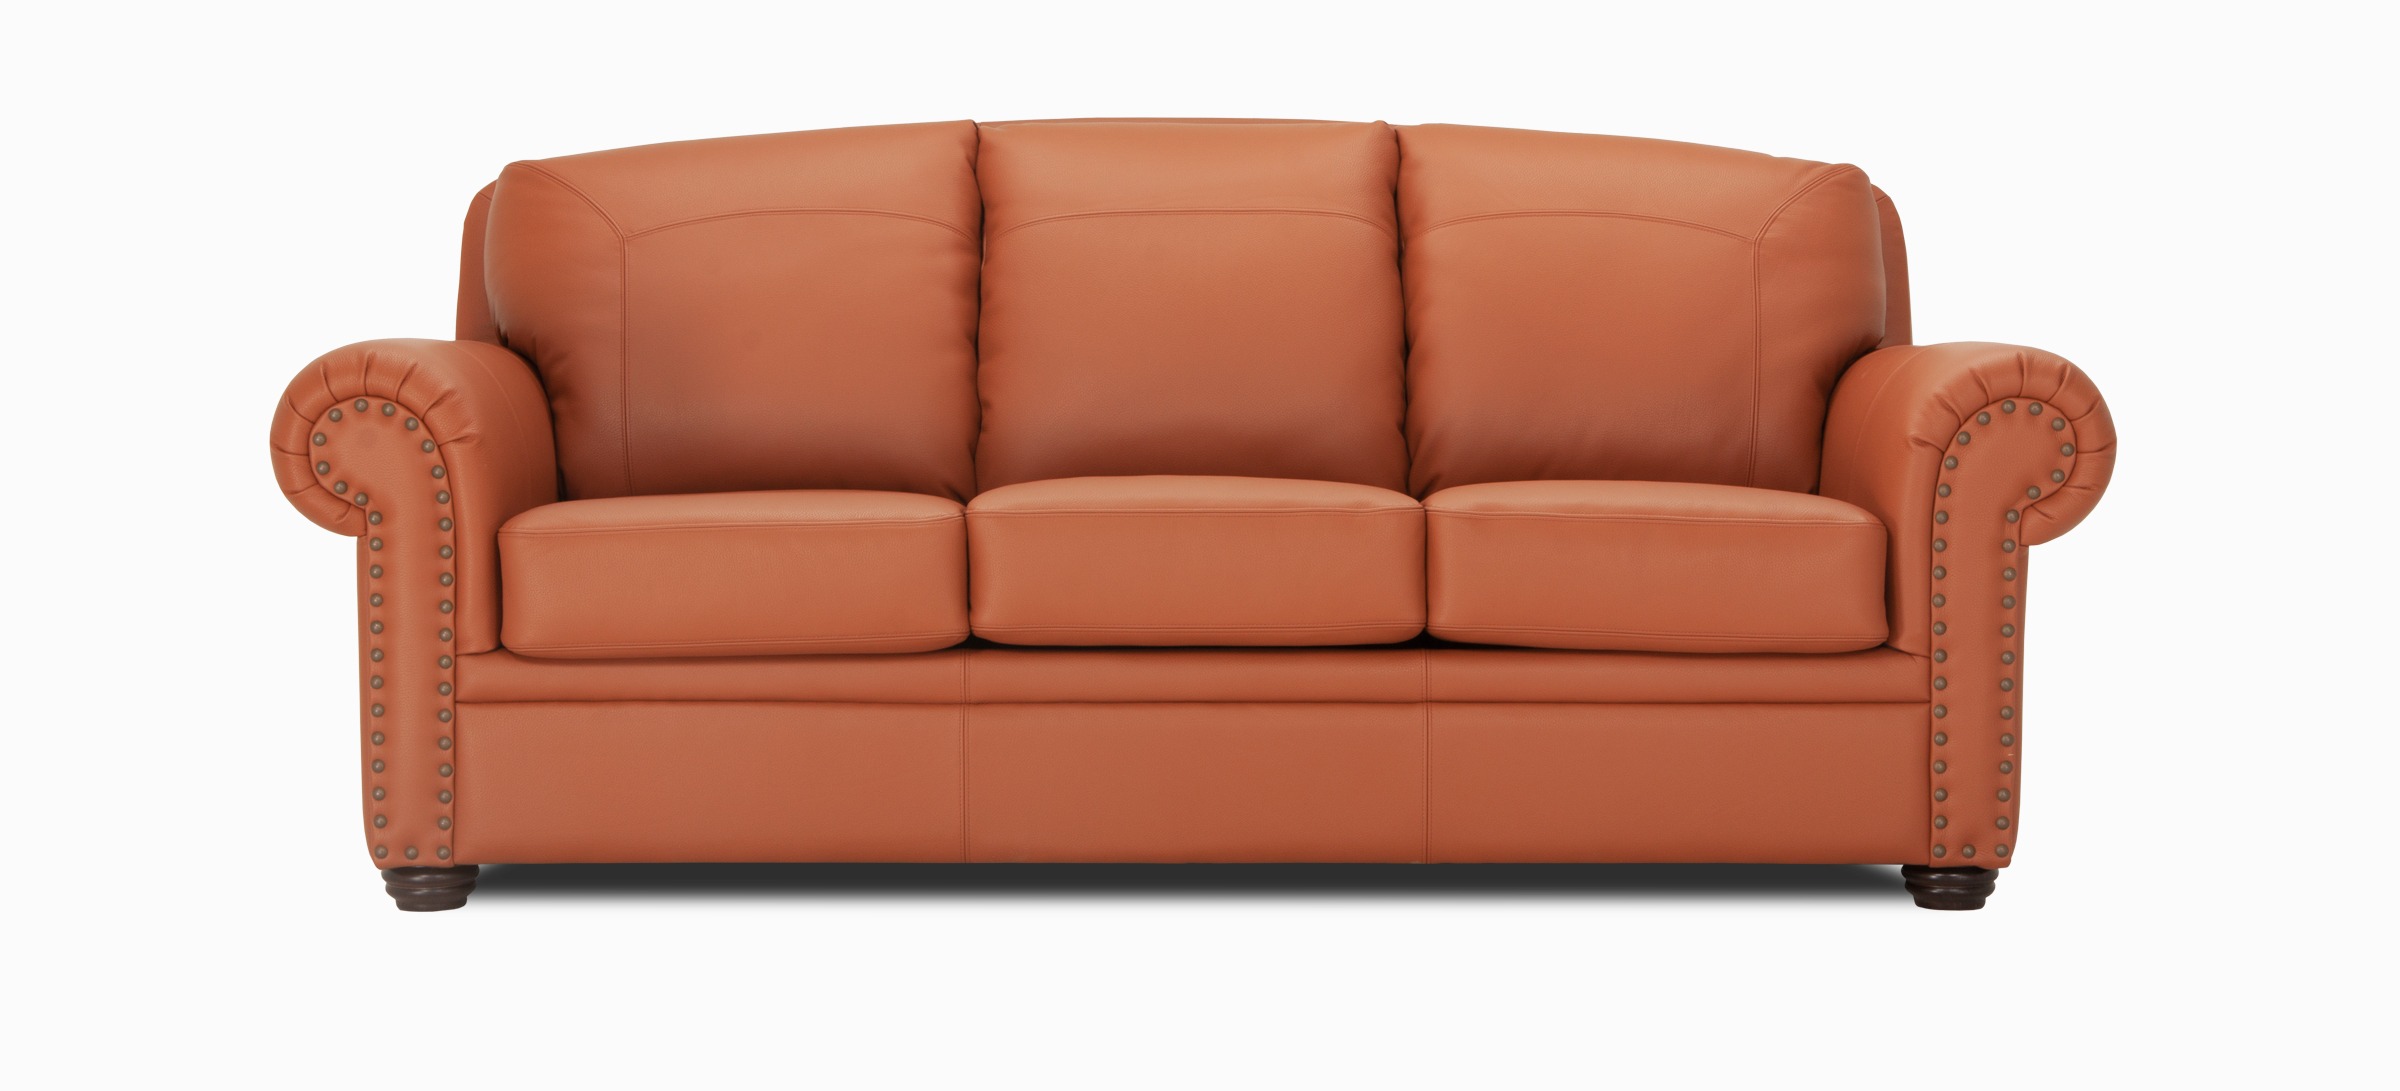 Harrison sofa